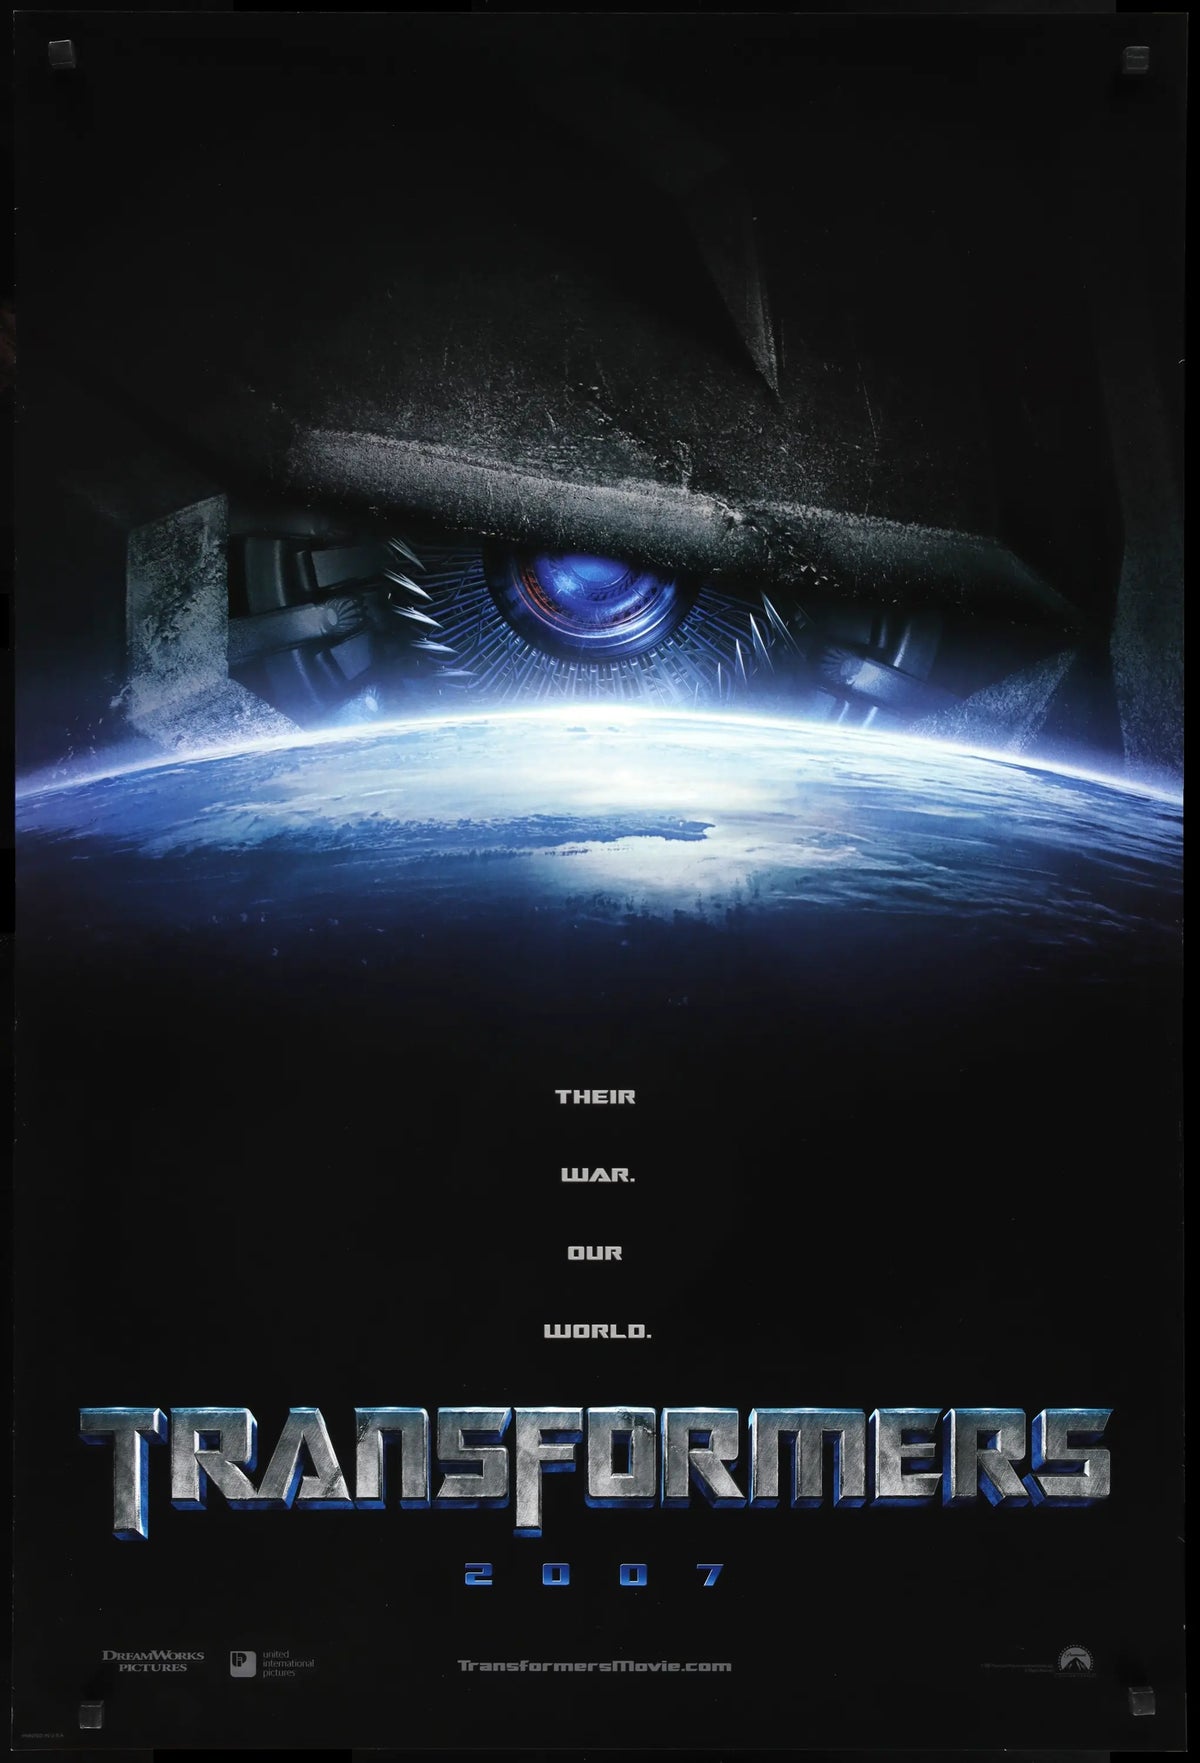 Transformers (2007) original movie poster for sale at Original Film Art